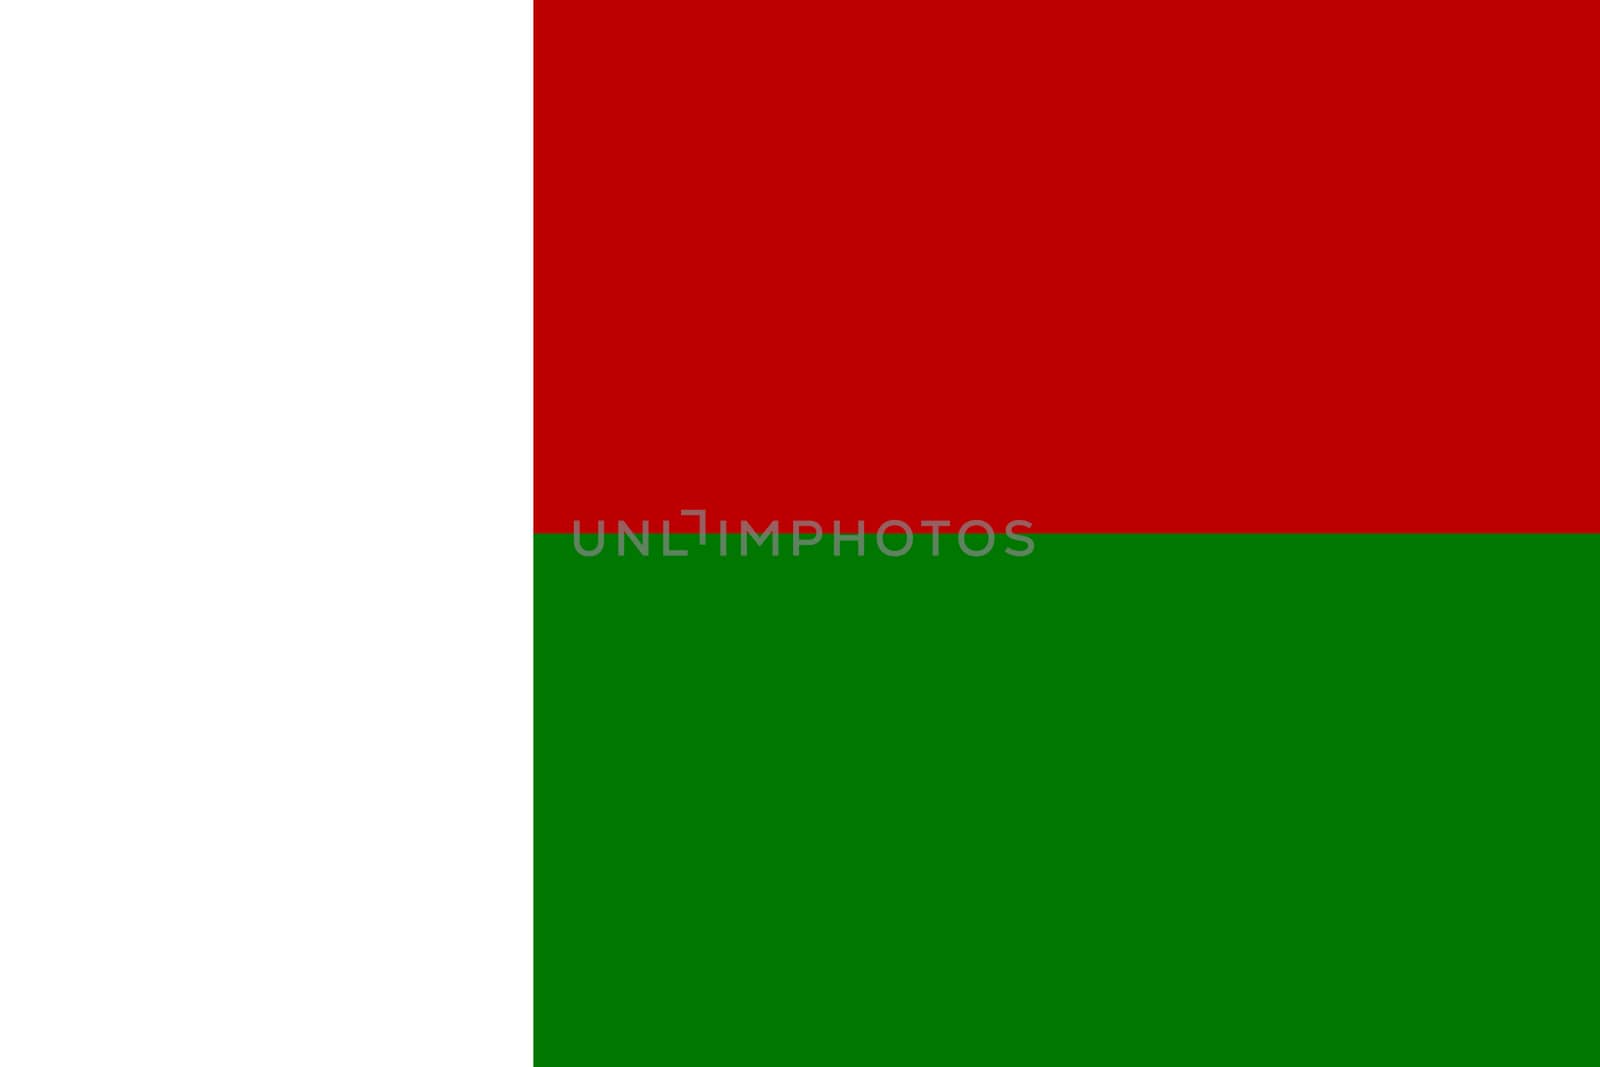 Flag of Madagascar by peromarketing